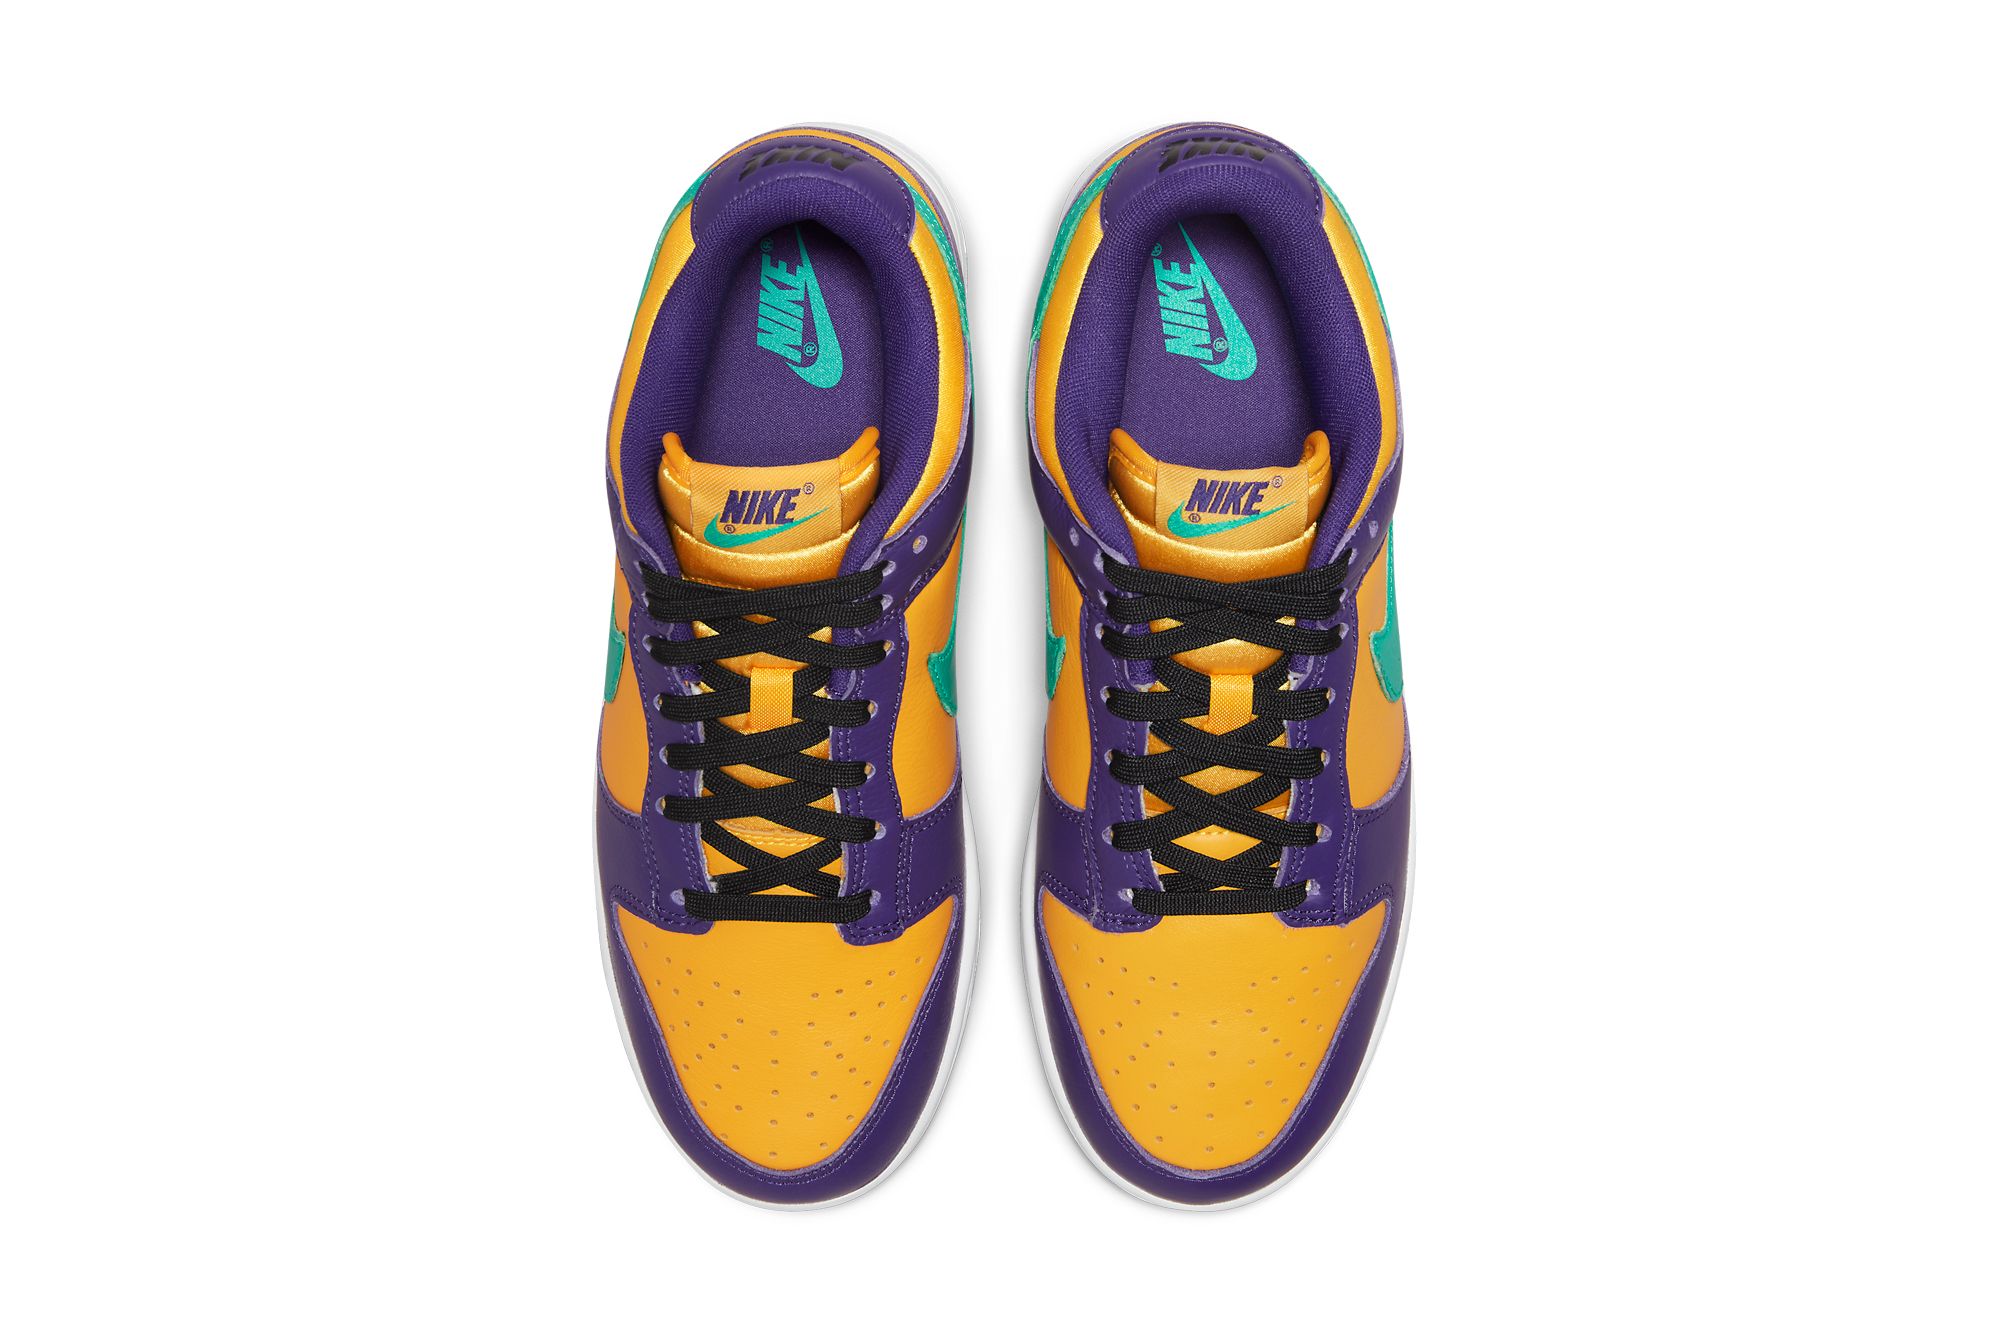 WNBA Legend Lisa Leslie Inspired This Nike Dunk Low